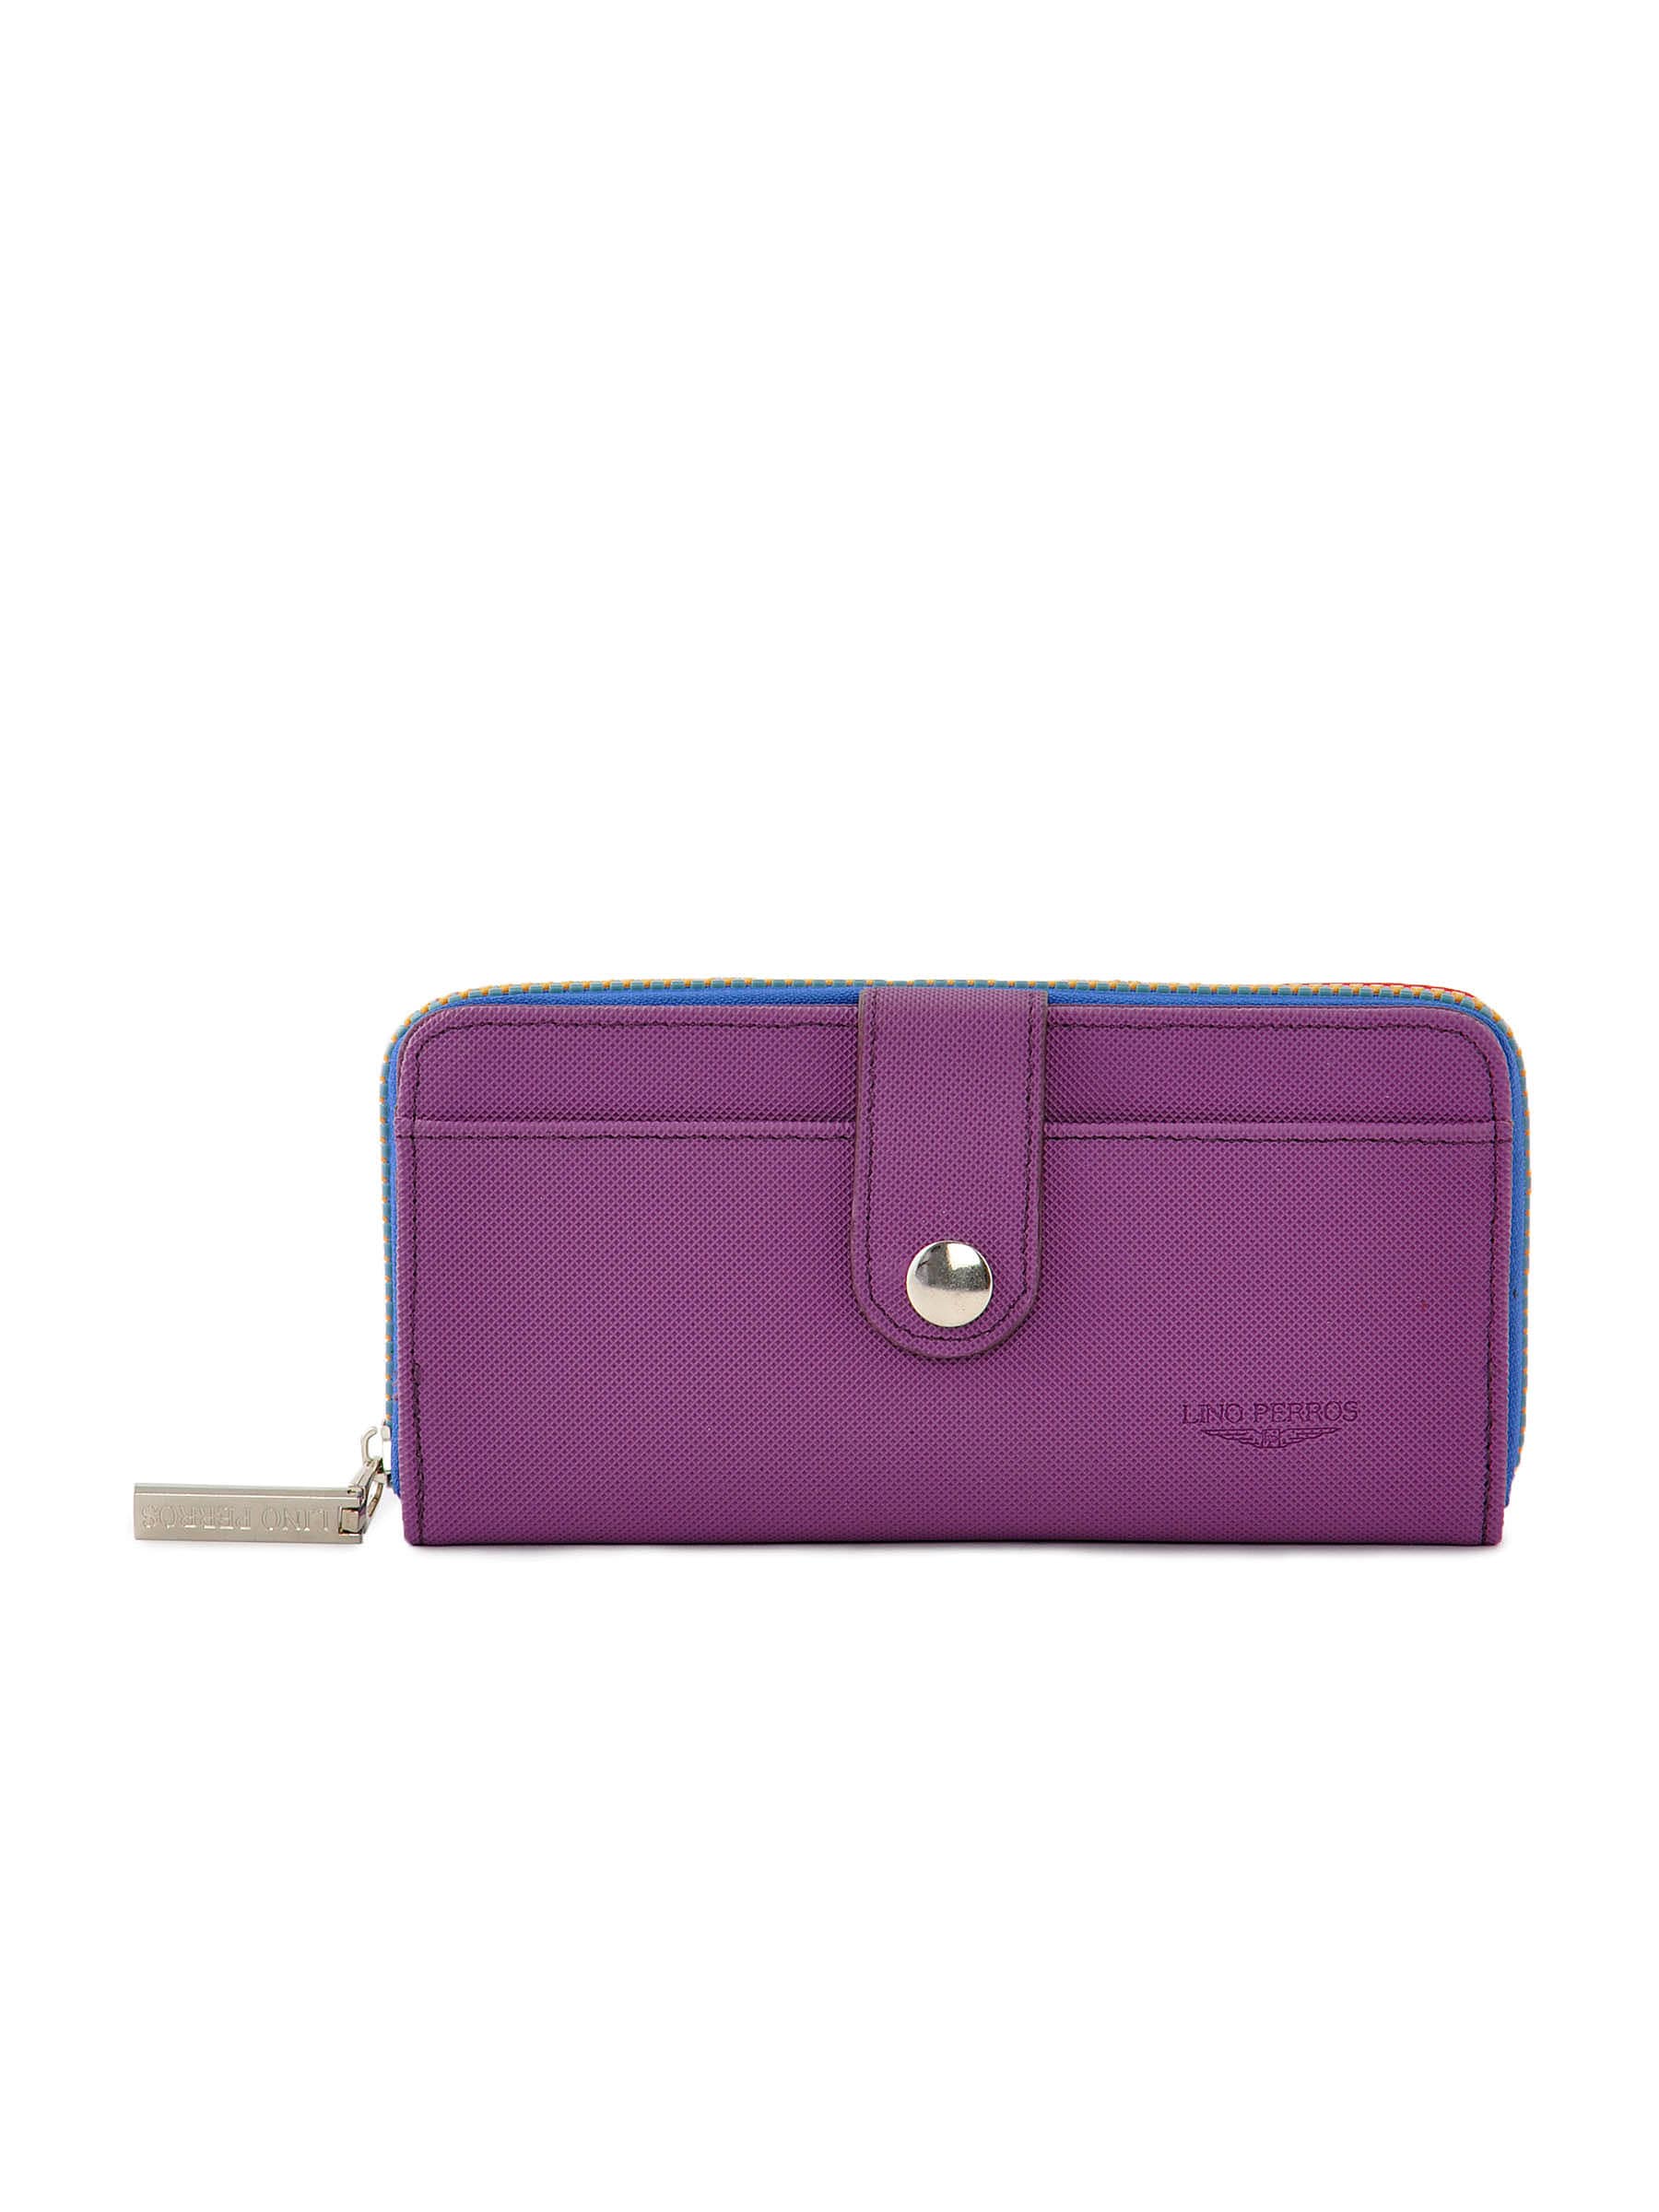 Lino Perros Women Blue Zip Purple Wallet